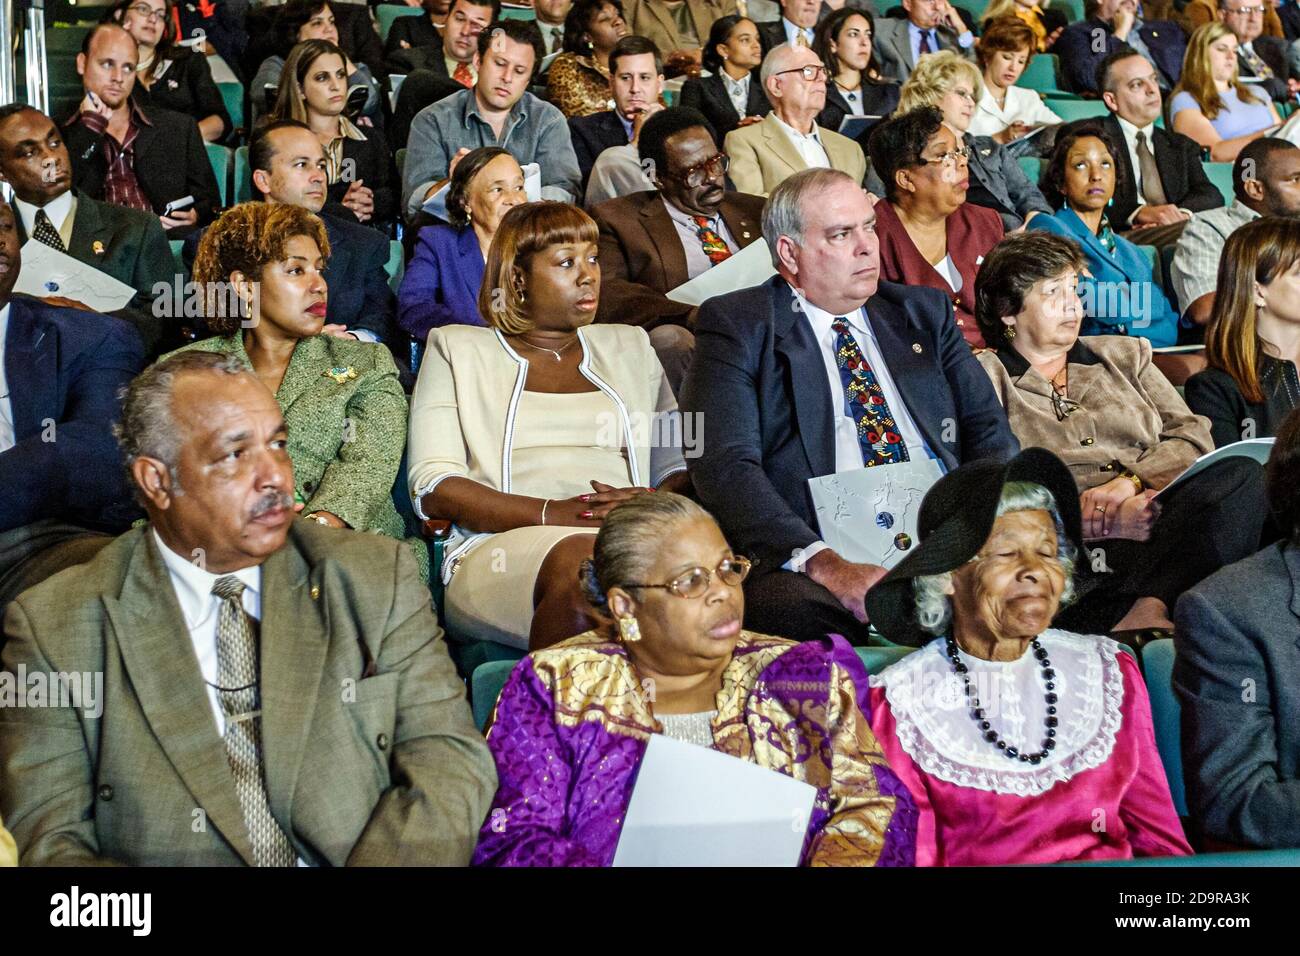 Miami Florida, Coral Gables University of Miami Gusman Hall, jährliche State of the County Address, Publikum Menge hört Uhren hören, Black man Männer w Stockfoto